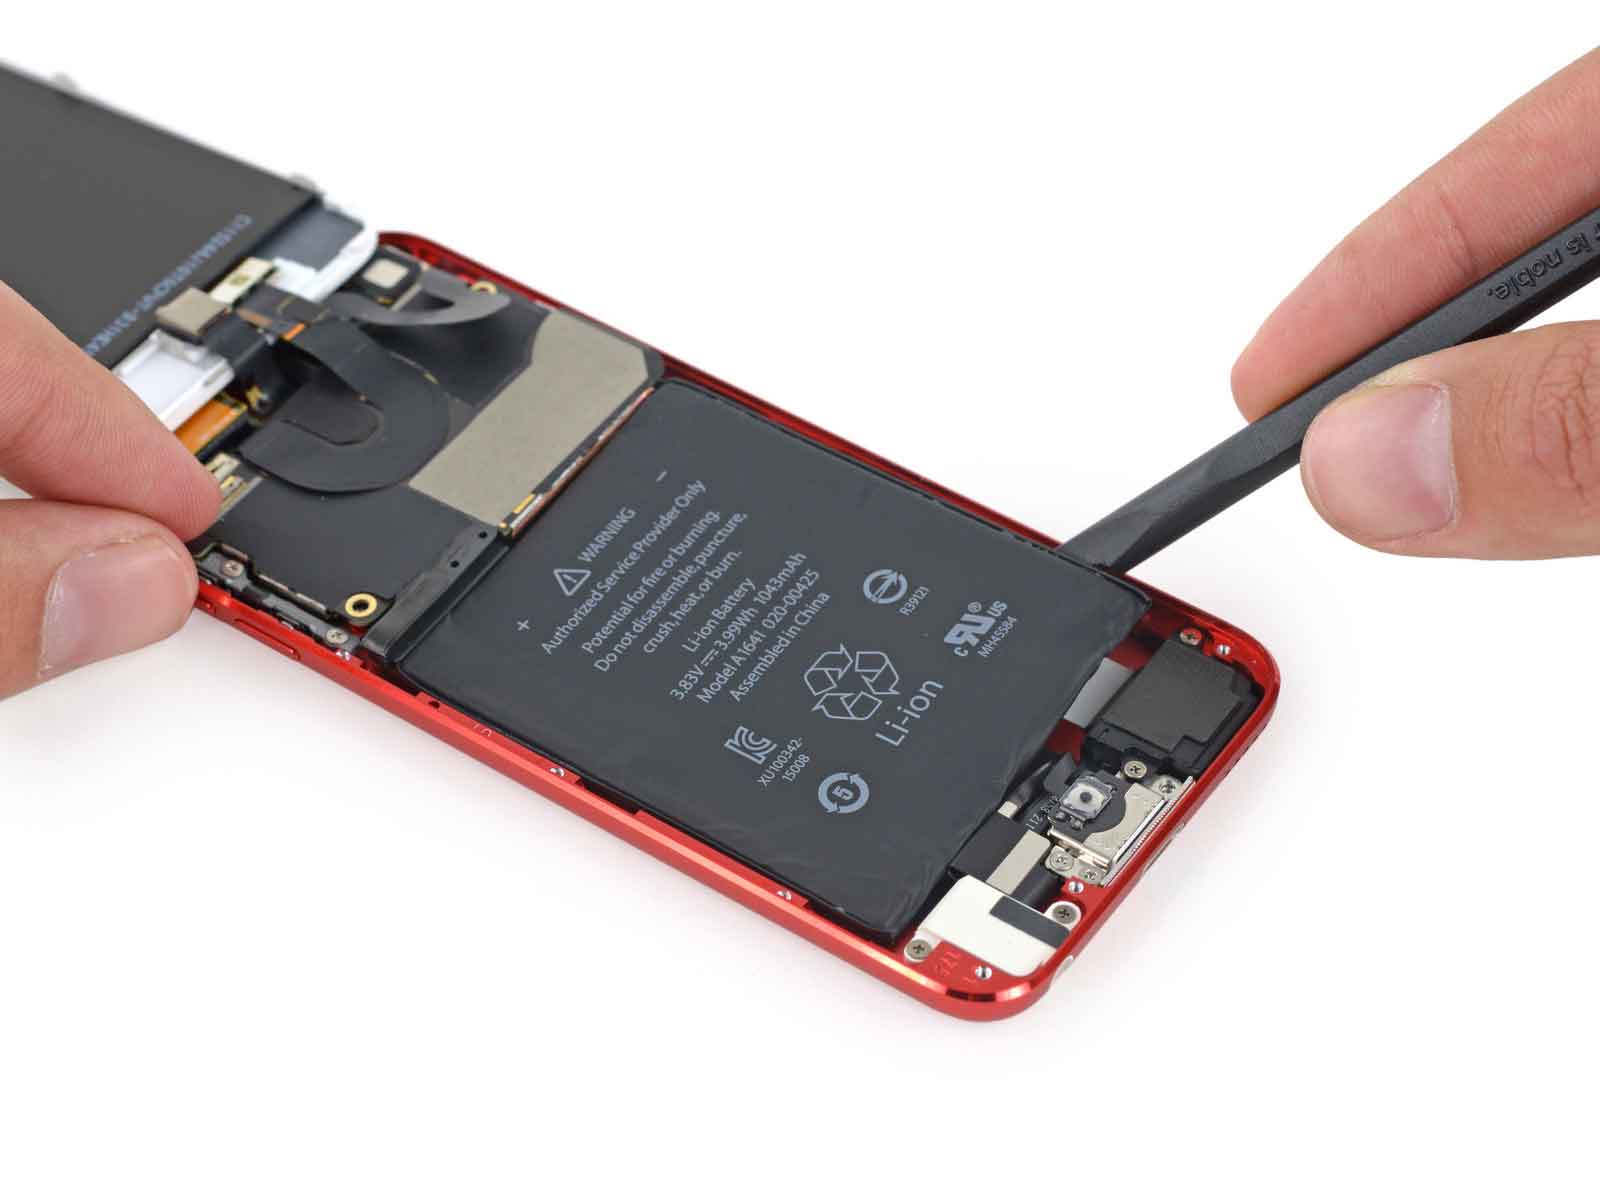 6th generation iPod Touch teardown